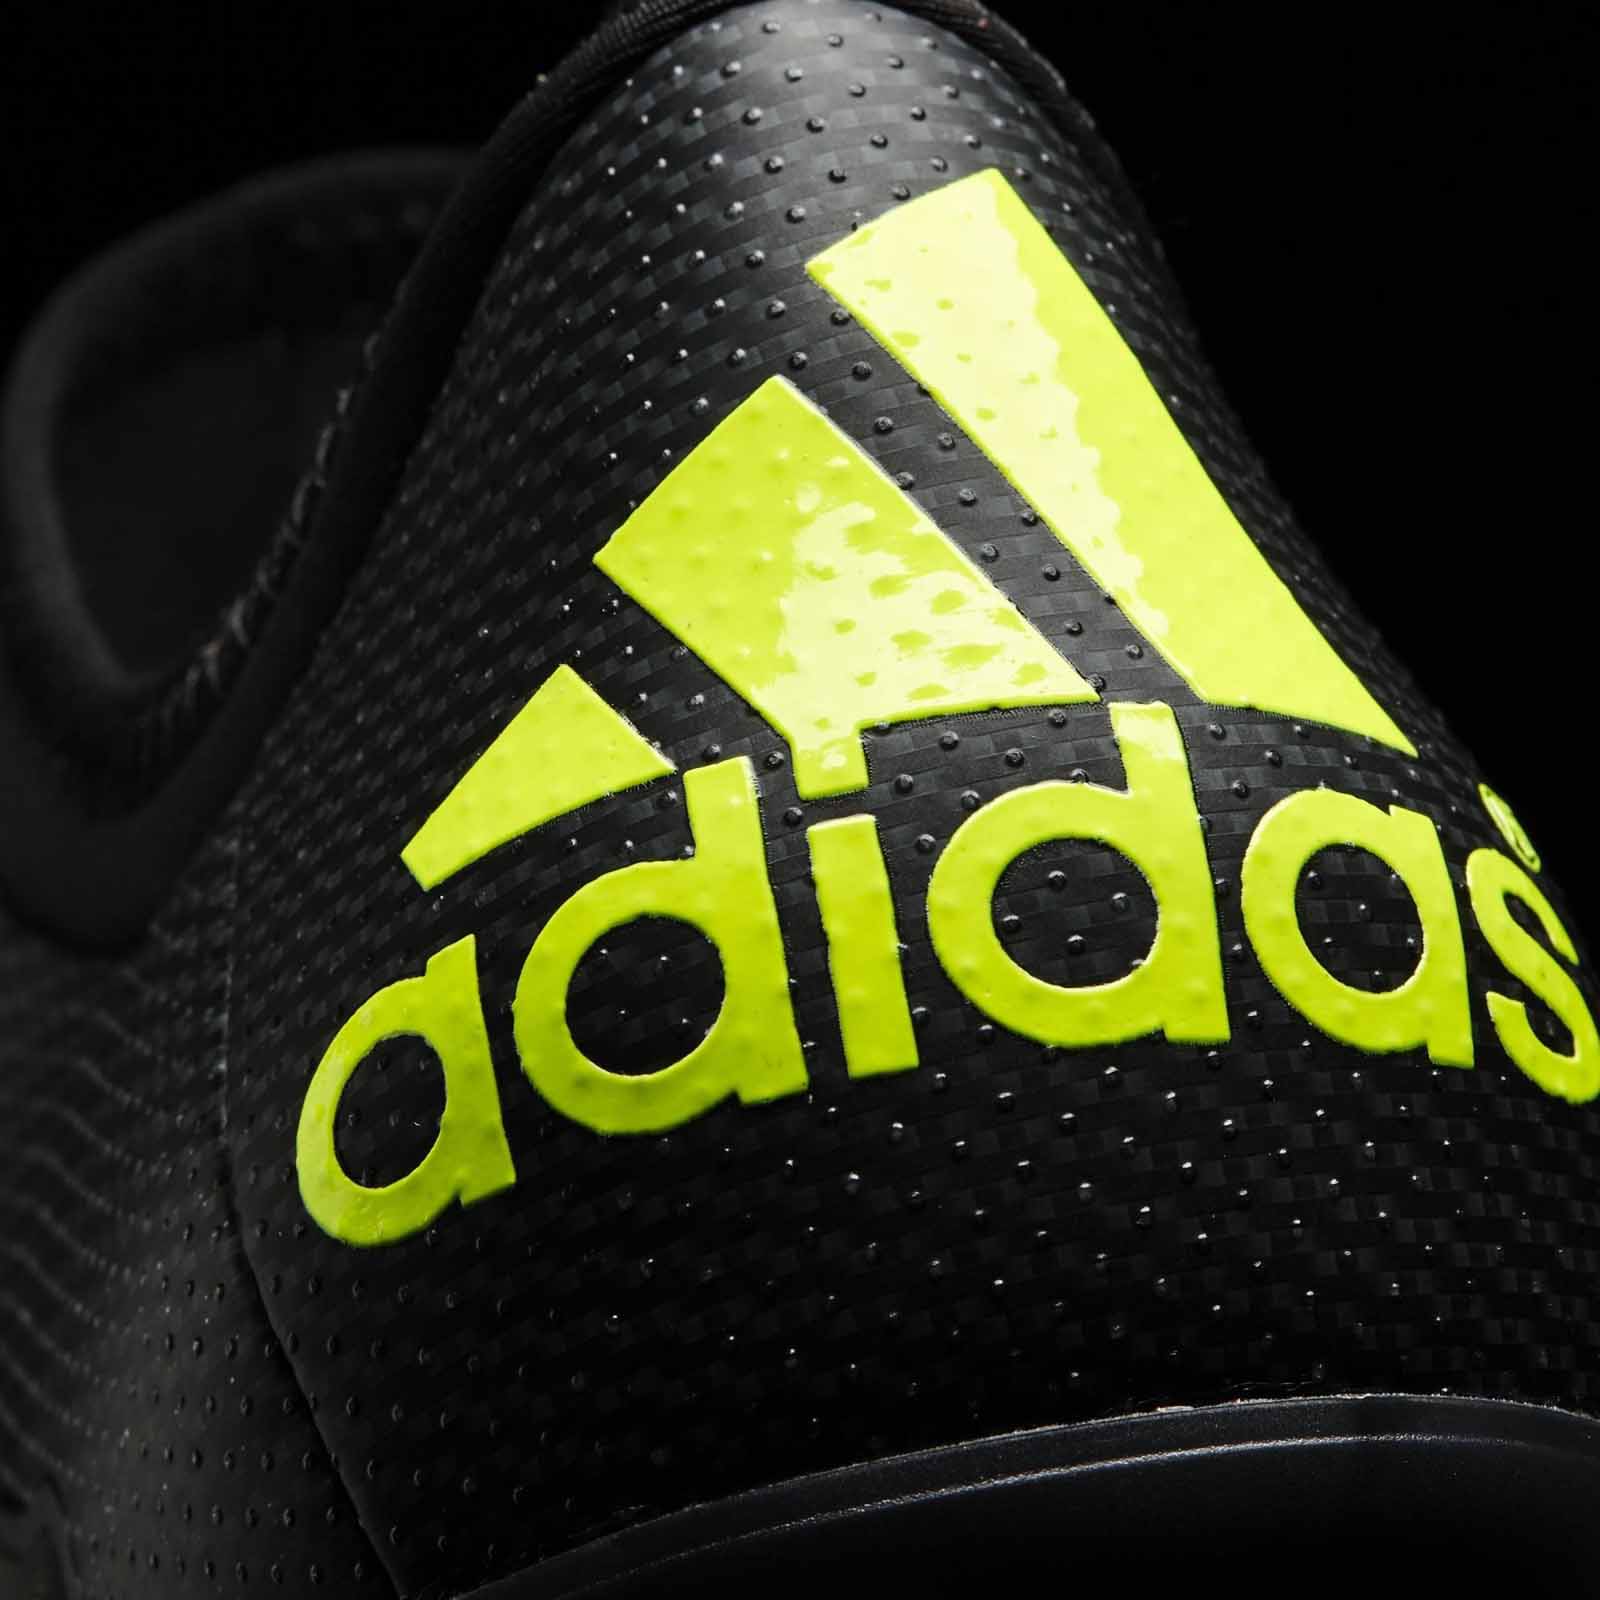 Black Adidas X 2015-2016 Boots Released - Footy Headlines